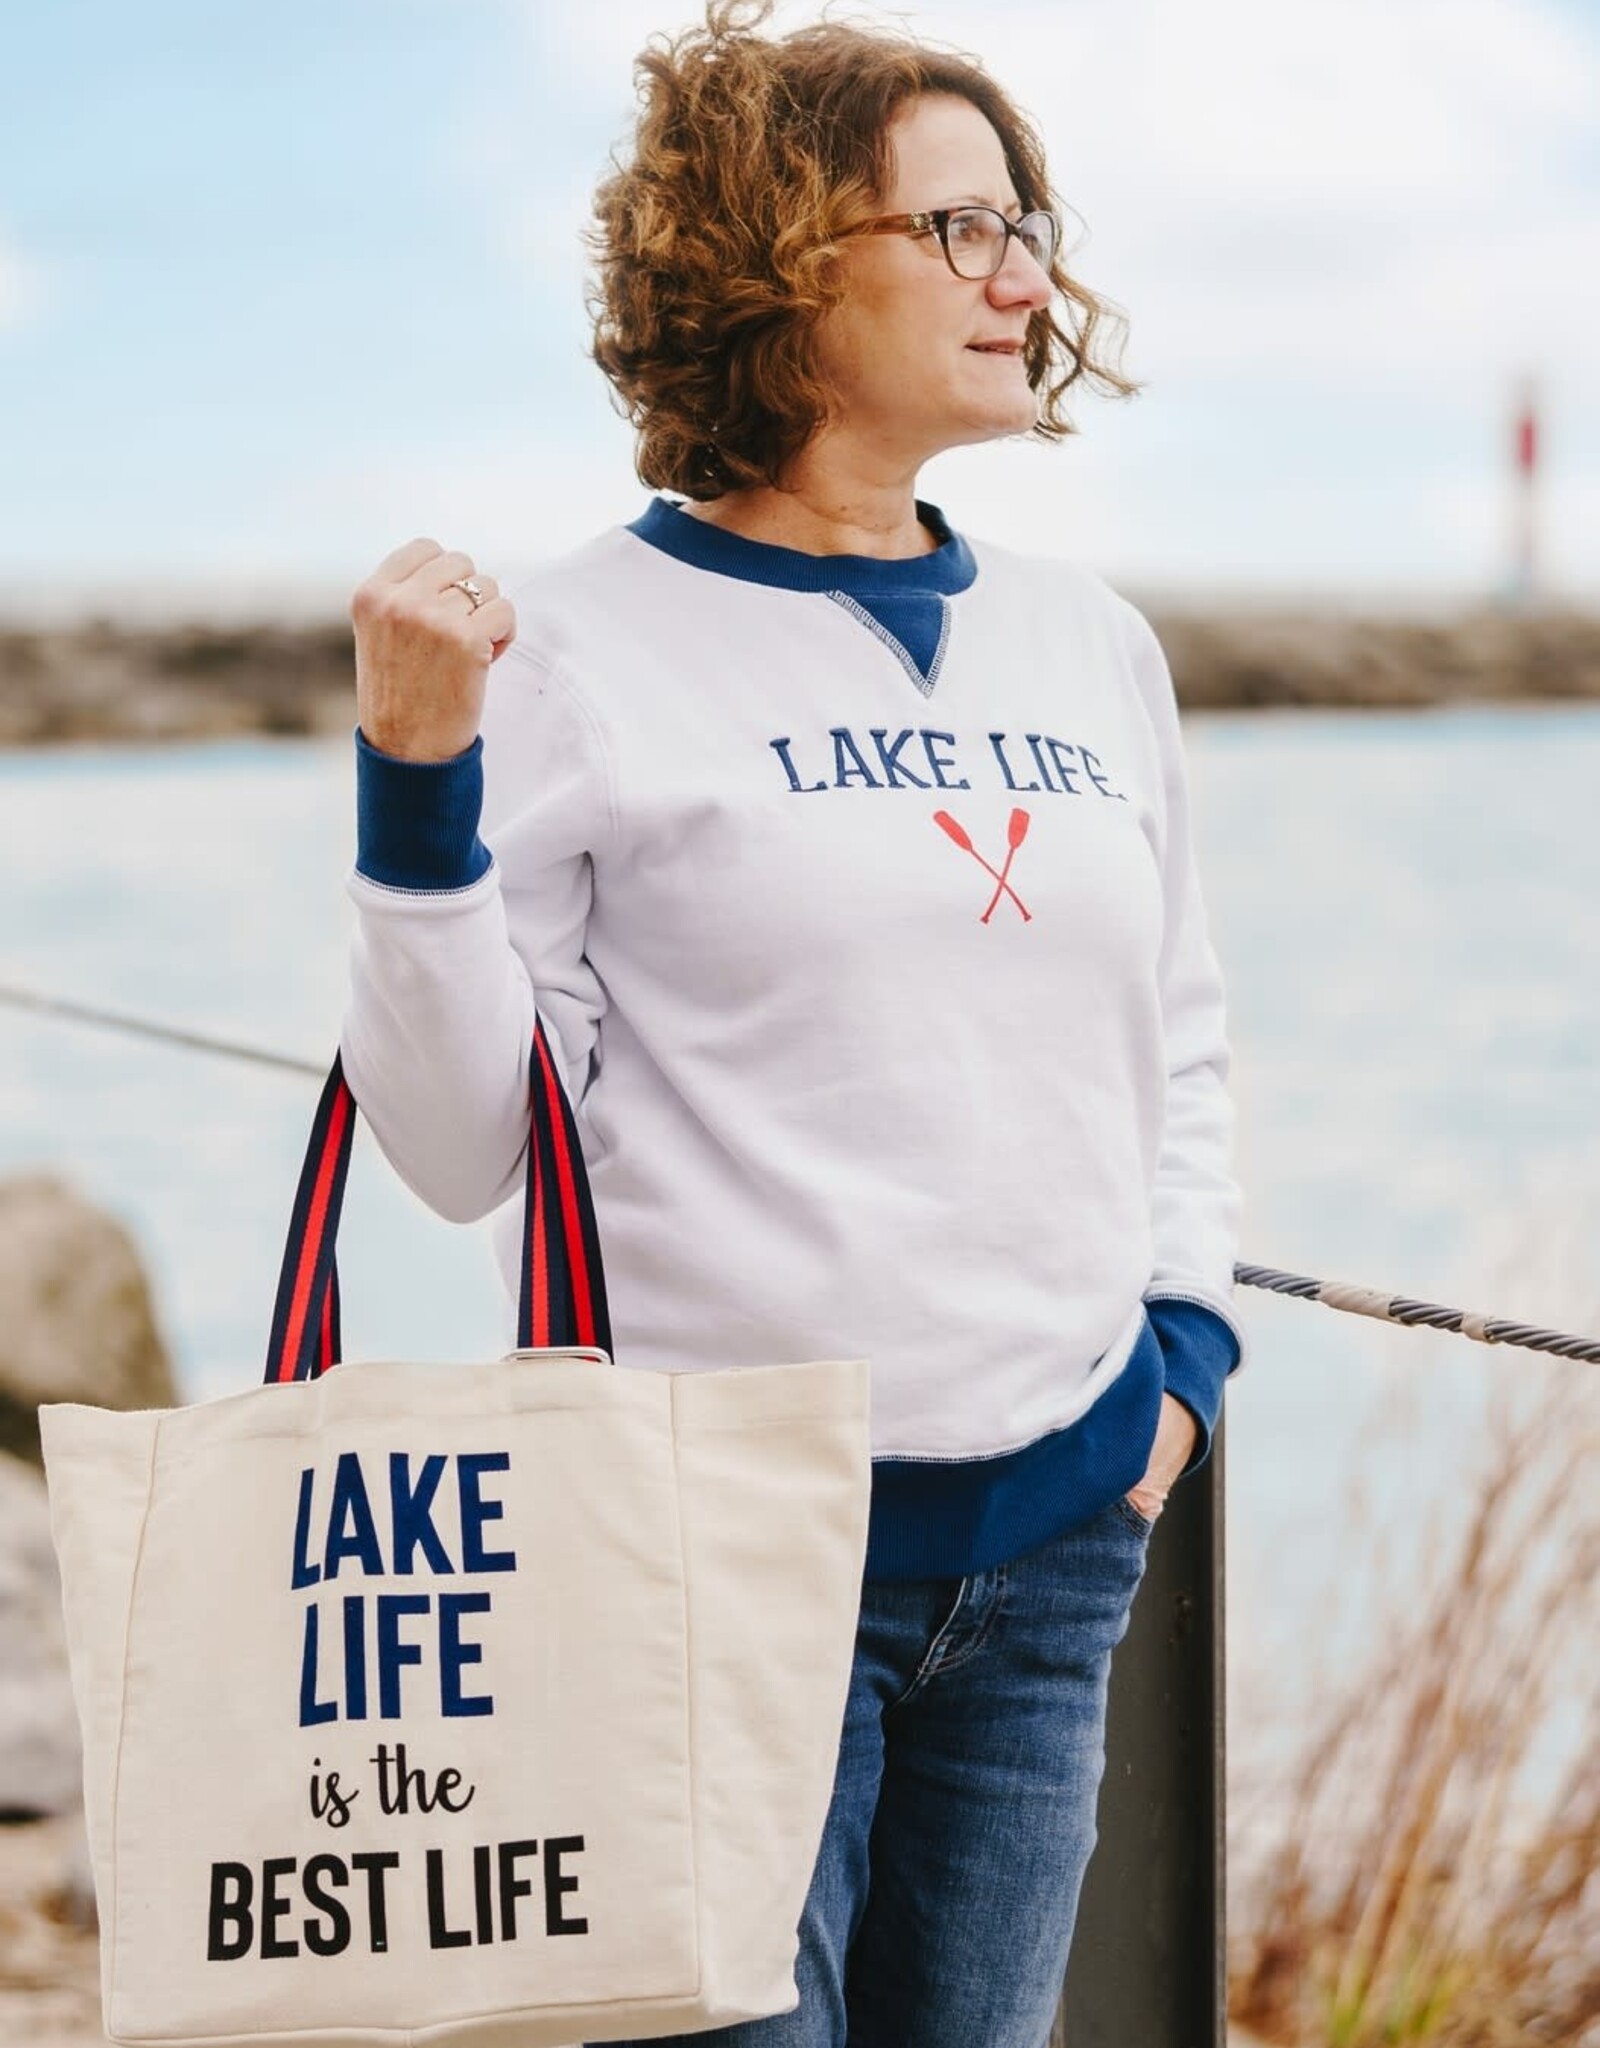 Lake Life - 100% Cotton Twill Tote Bag